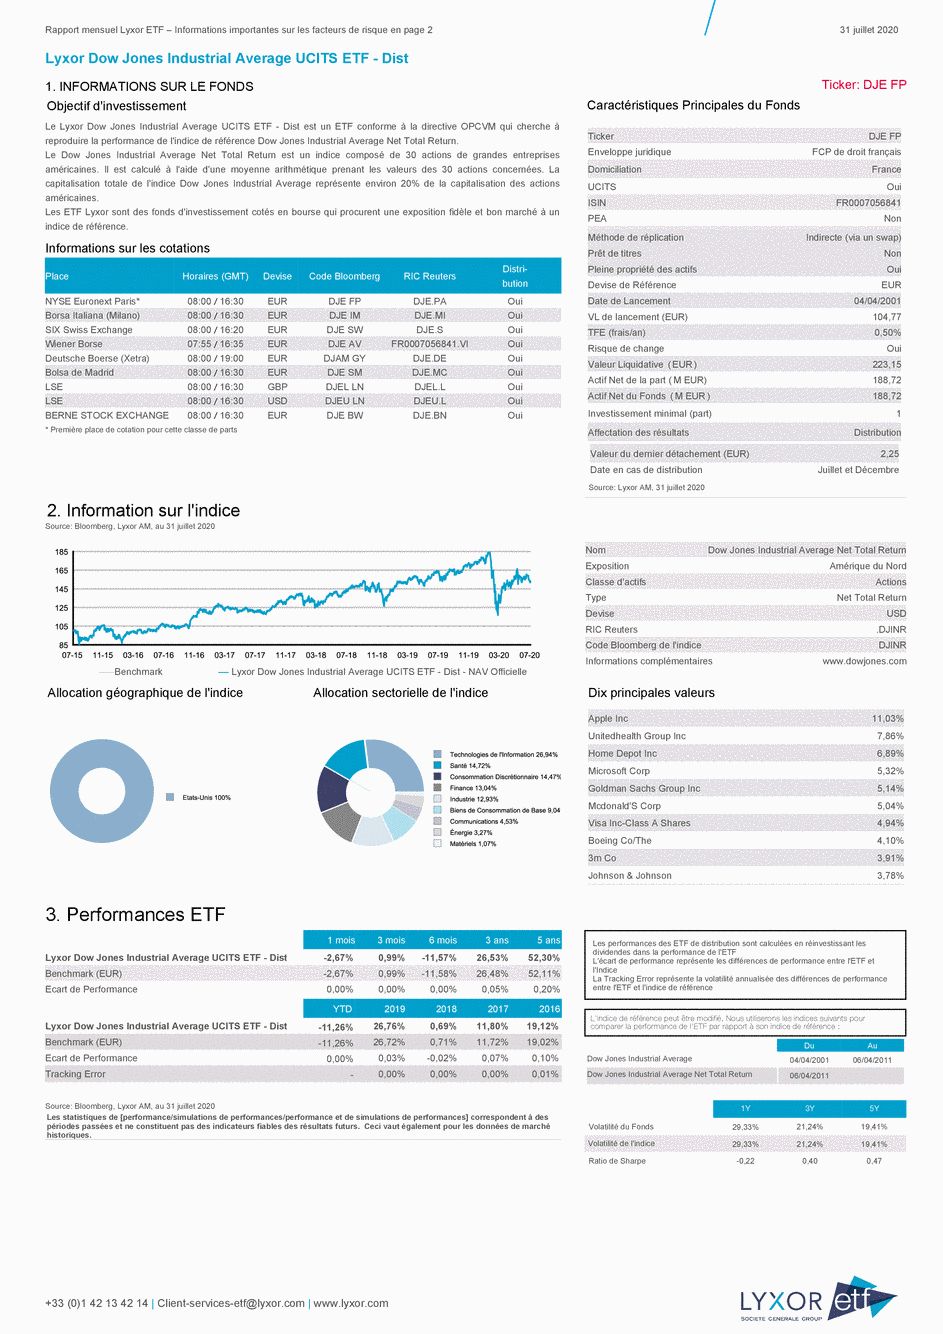 Reporting Lyxor Dow Jones Industrial Average UCITS ETF - Dist - 31/07/2020 - Français